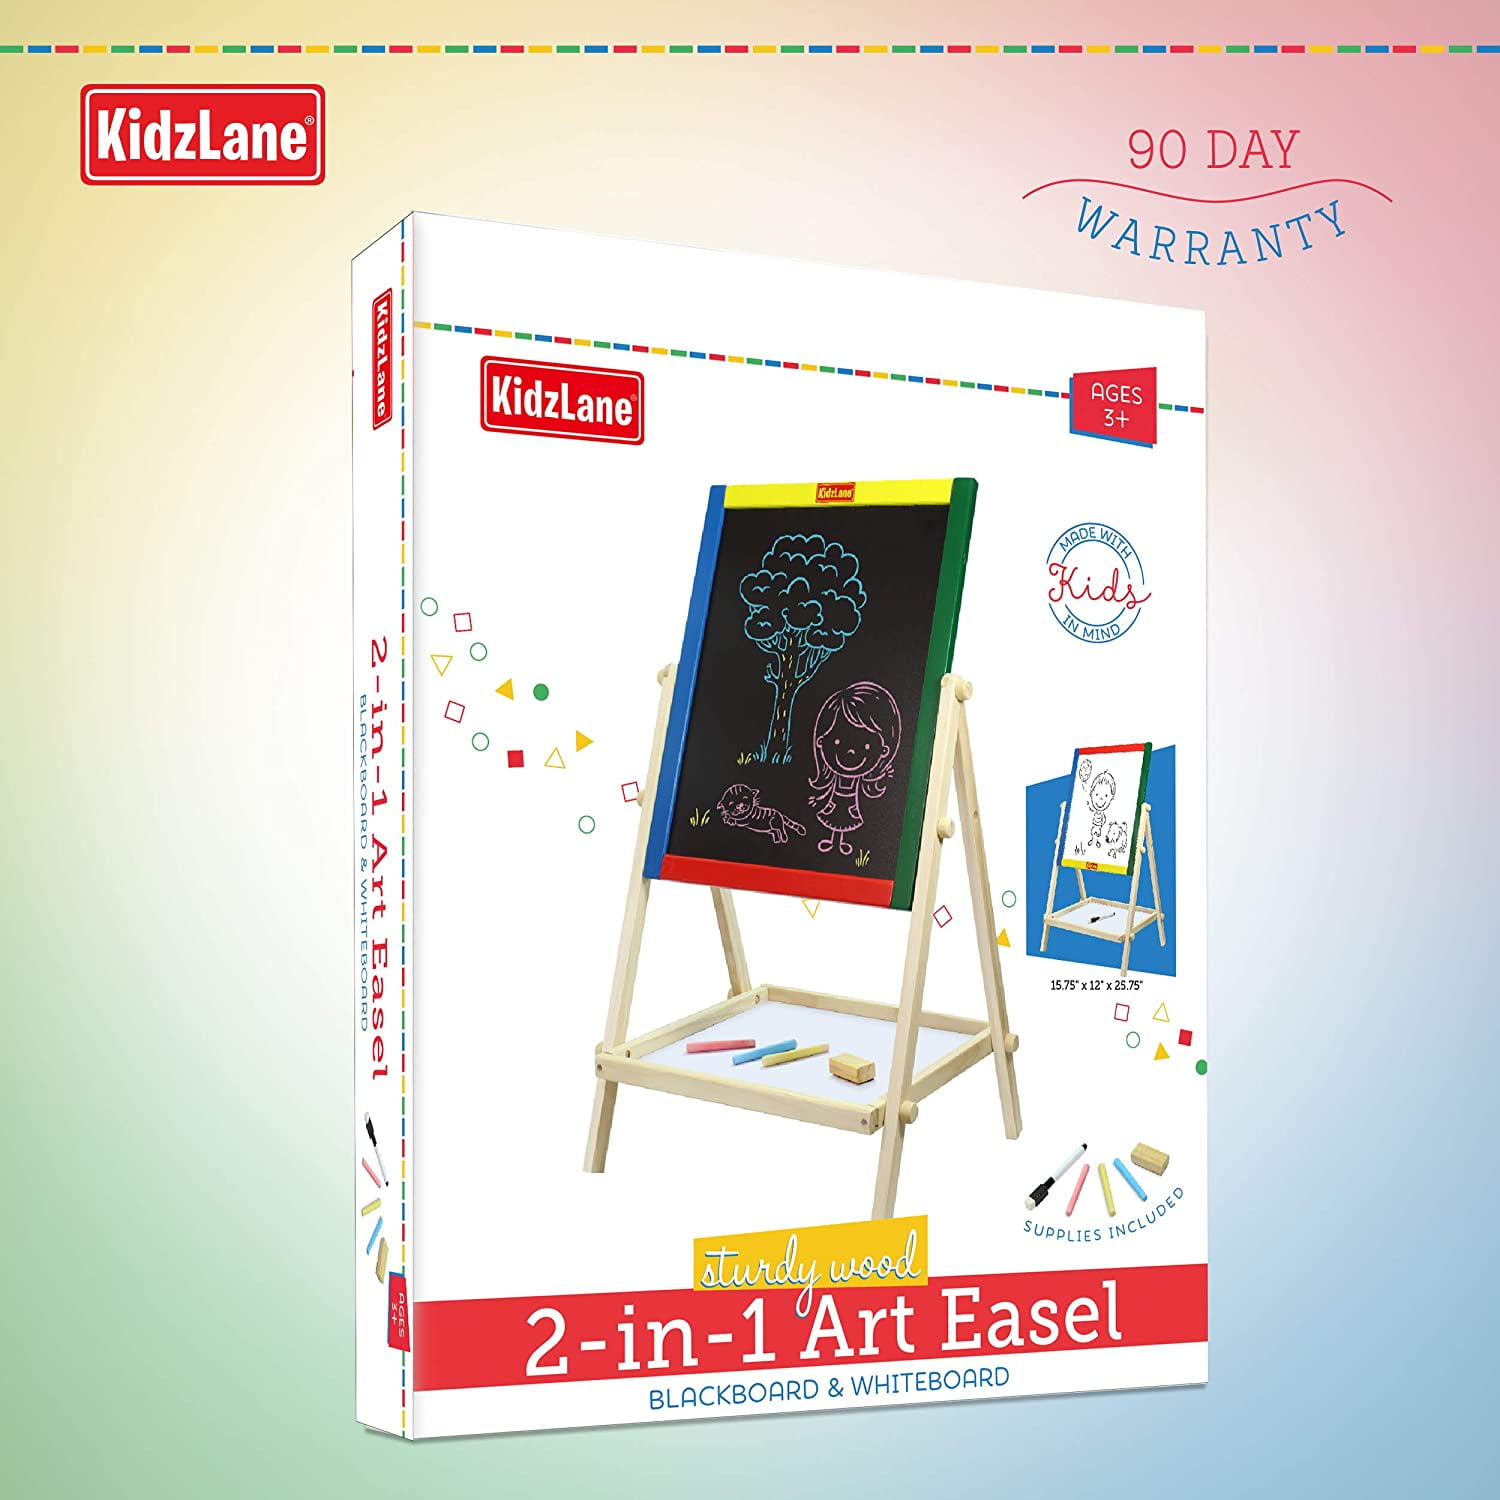 Kidzlane Art Easel for Kids Wooden Toddler Drawing Board 25.75